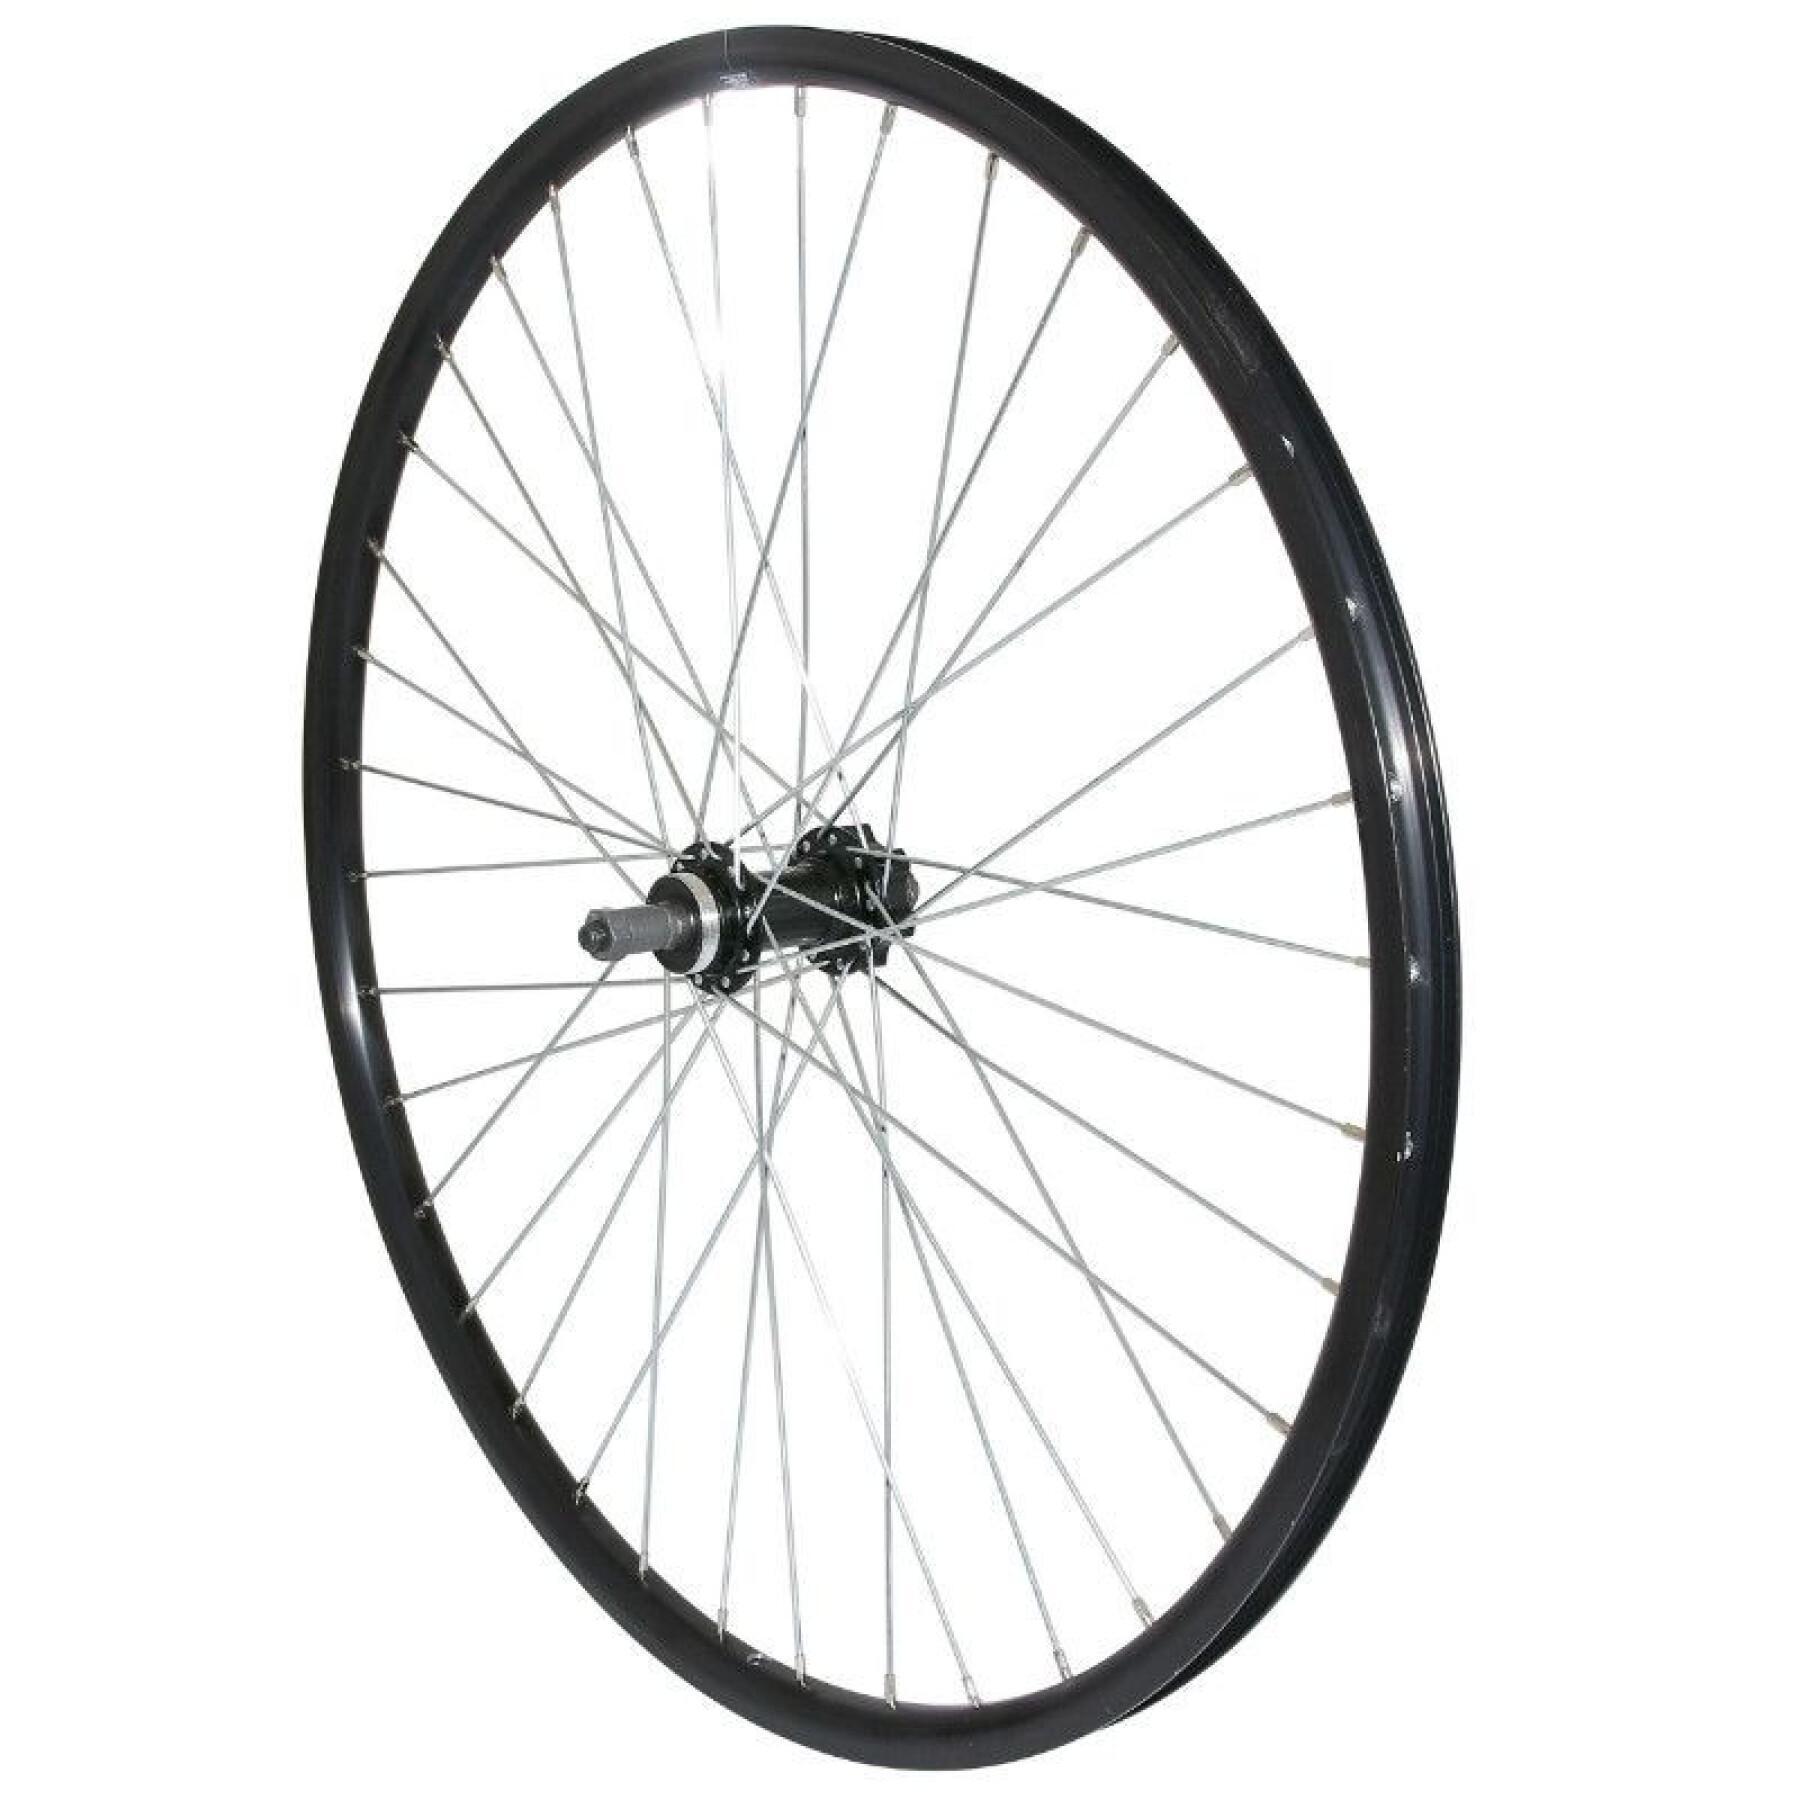 Mountain bike wheel disc rear aluminum double wall hub 36 aluminum spokes 6 holes P2R 8-7-6V.